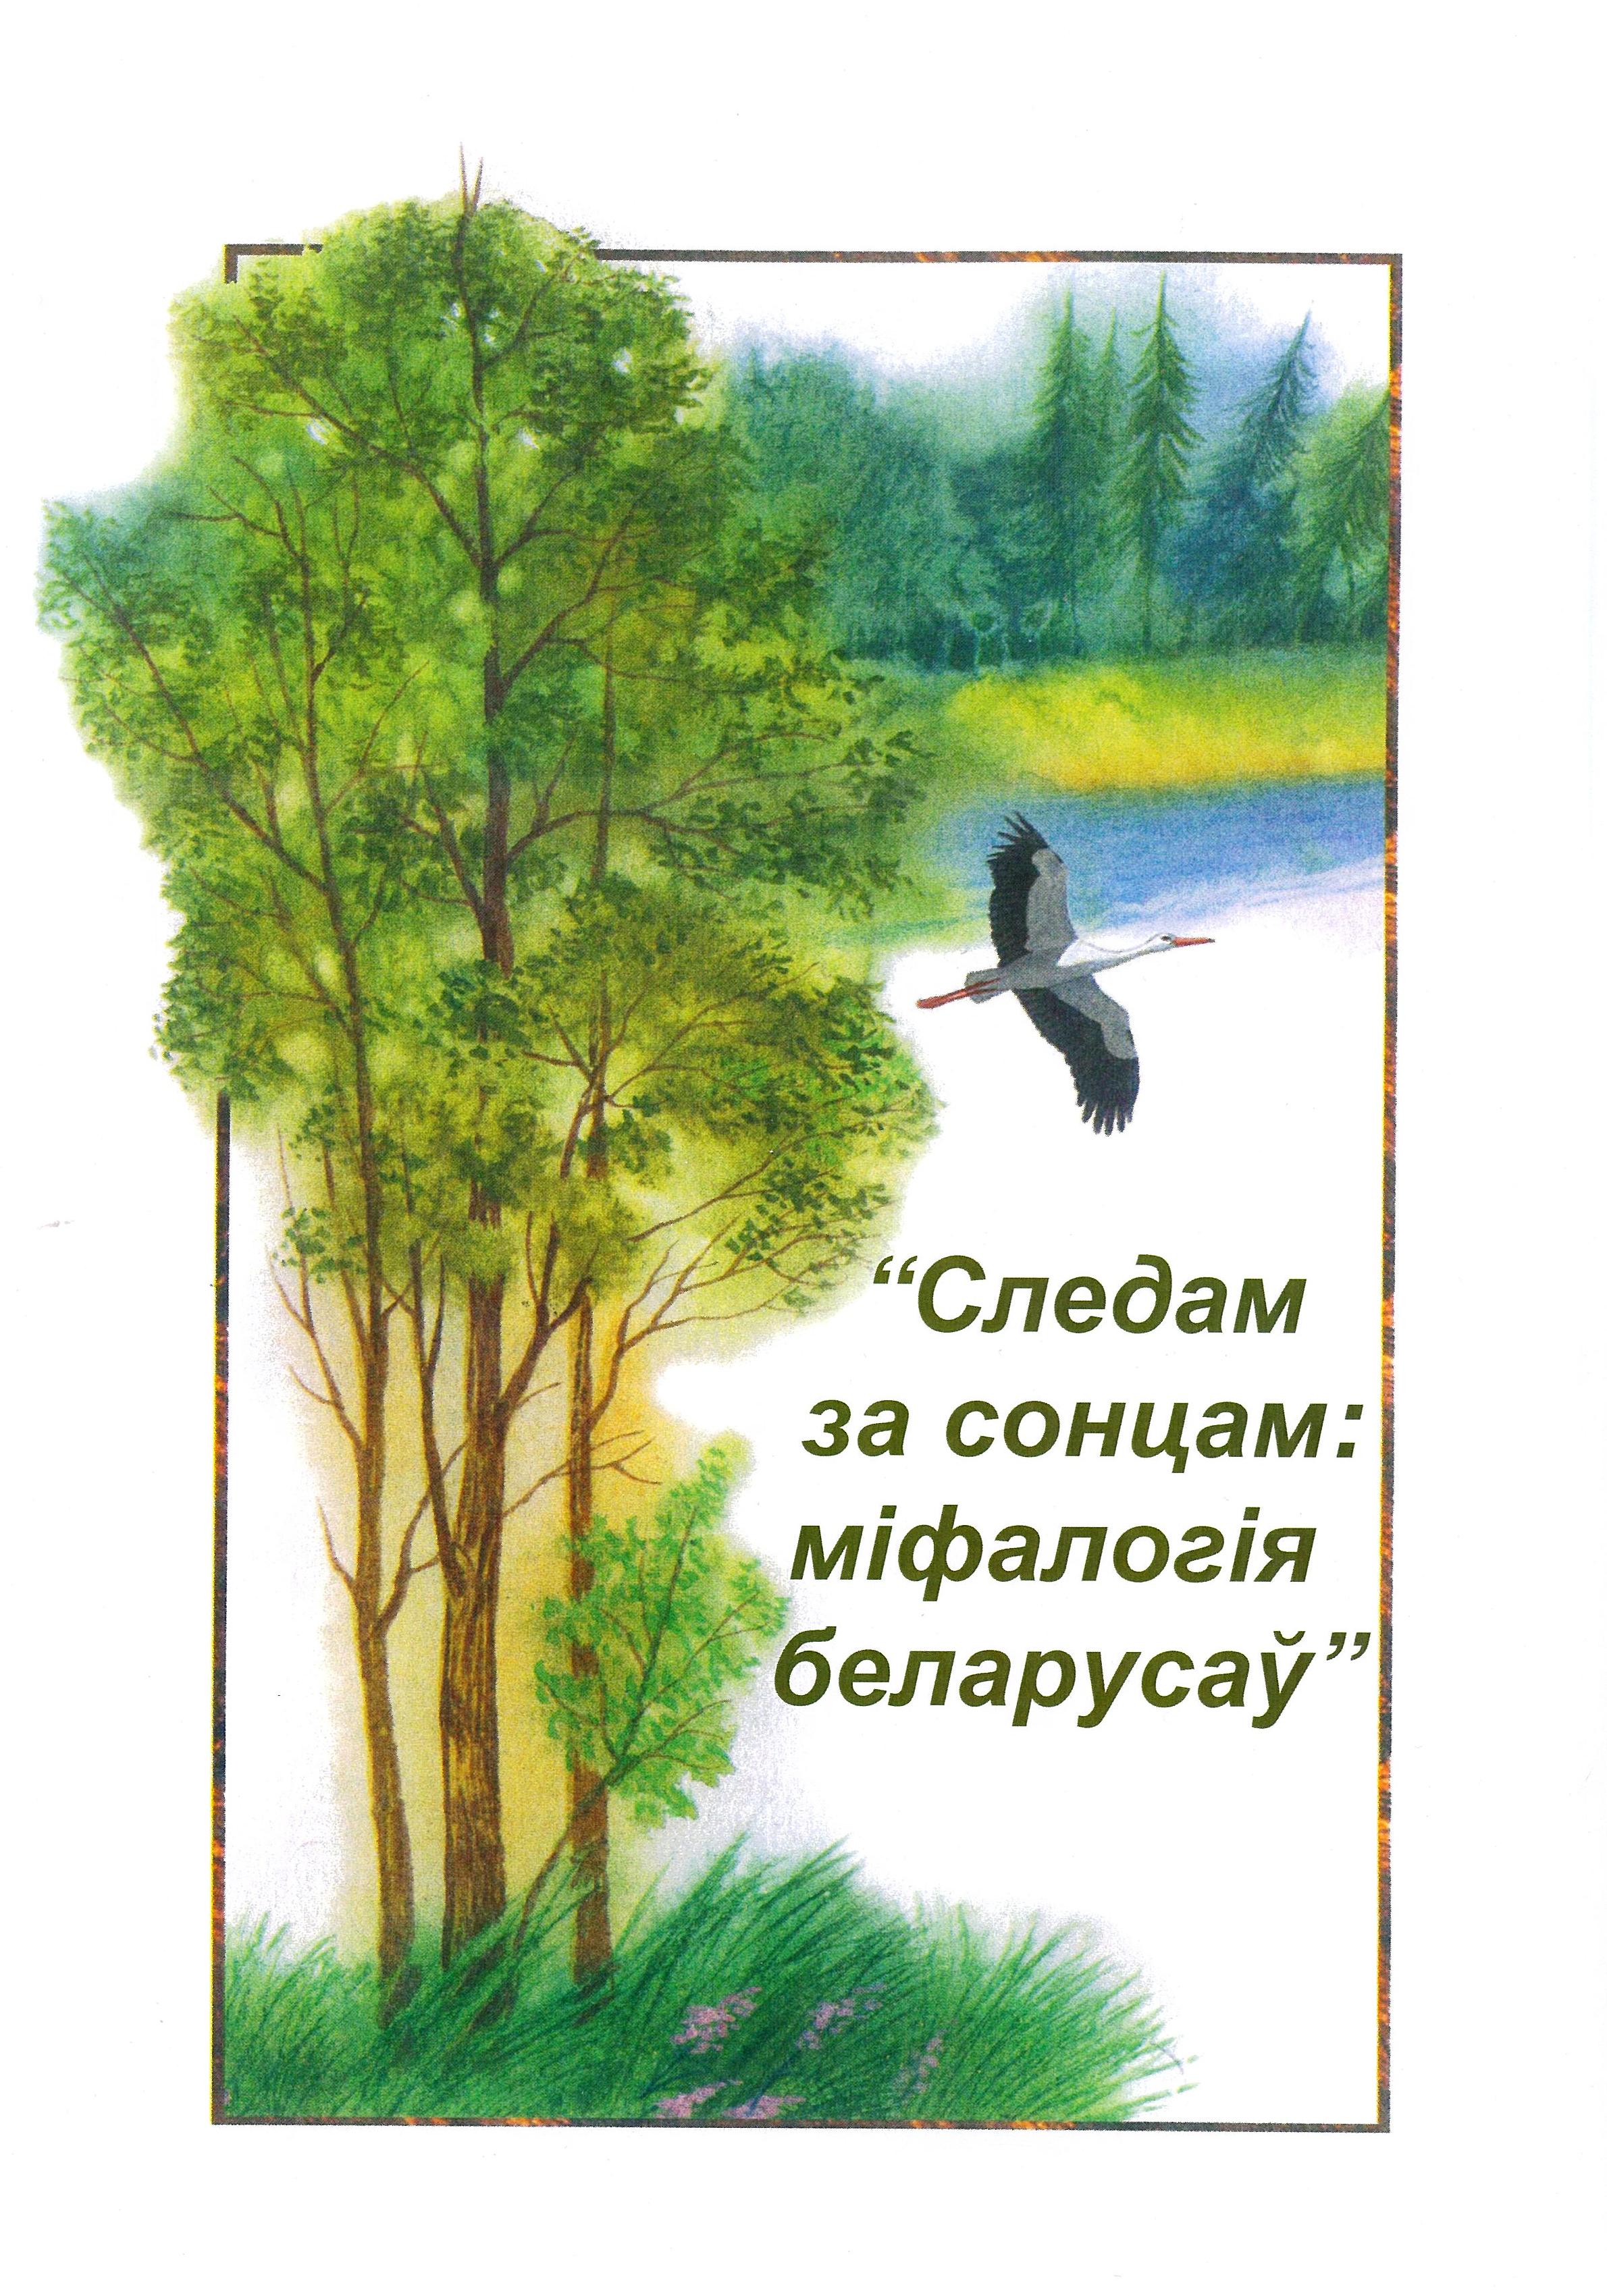 Following the sun: mythology of Belarusians